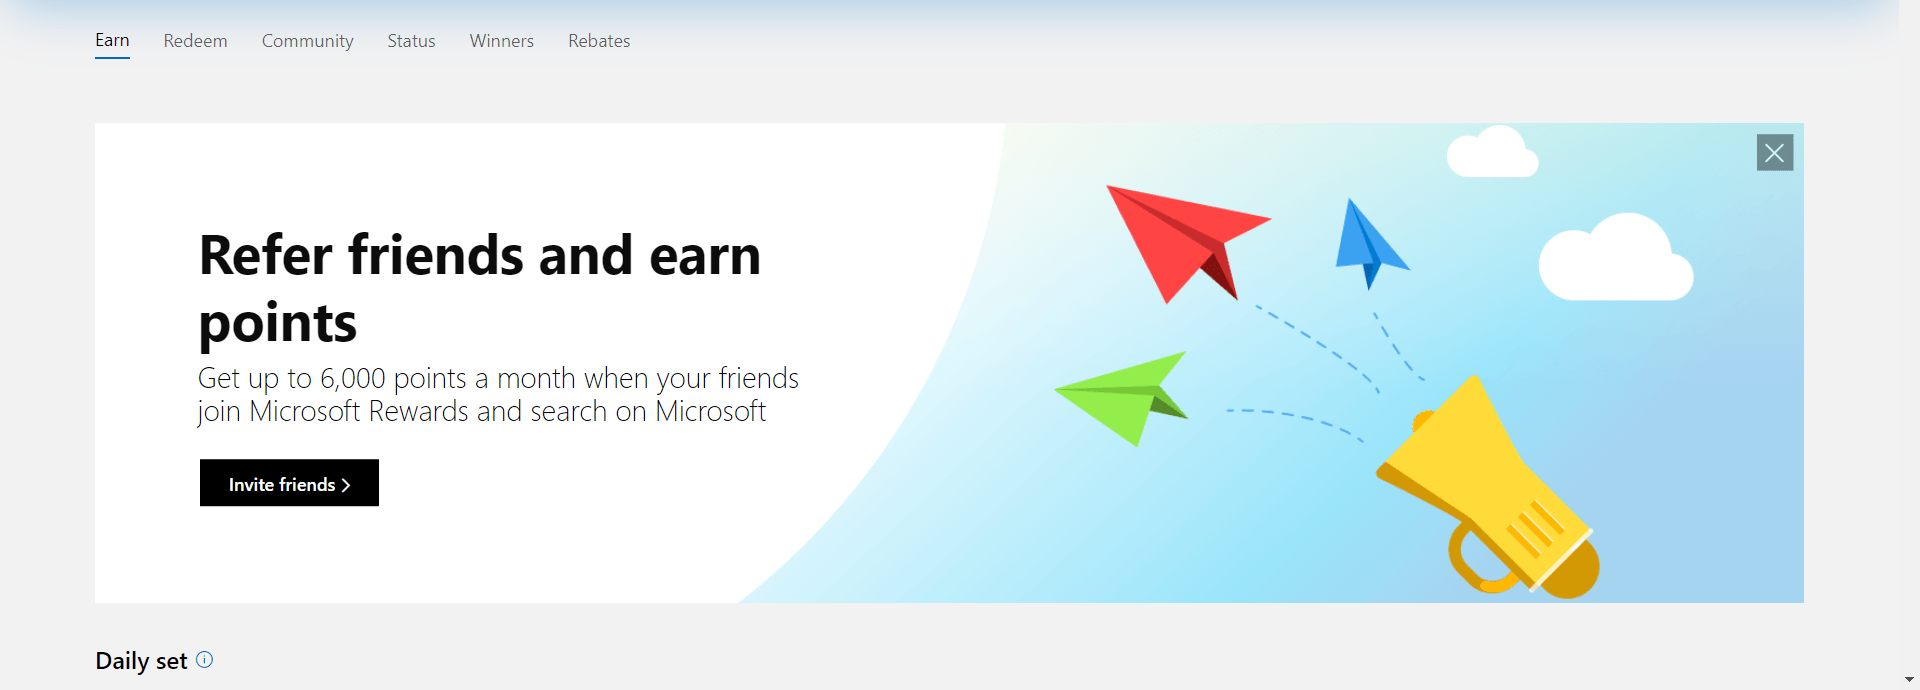 Bing Rewards Referral